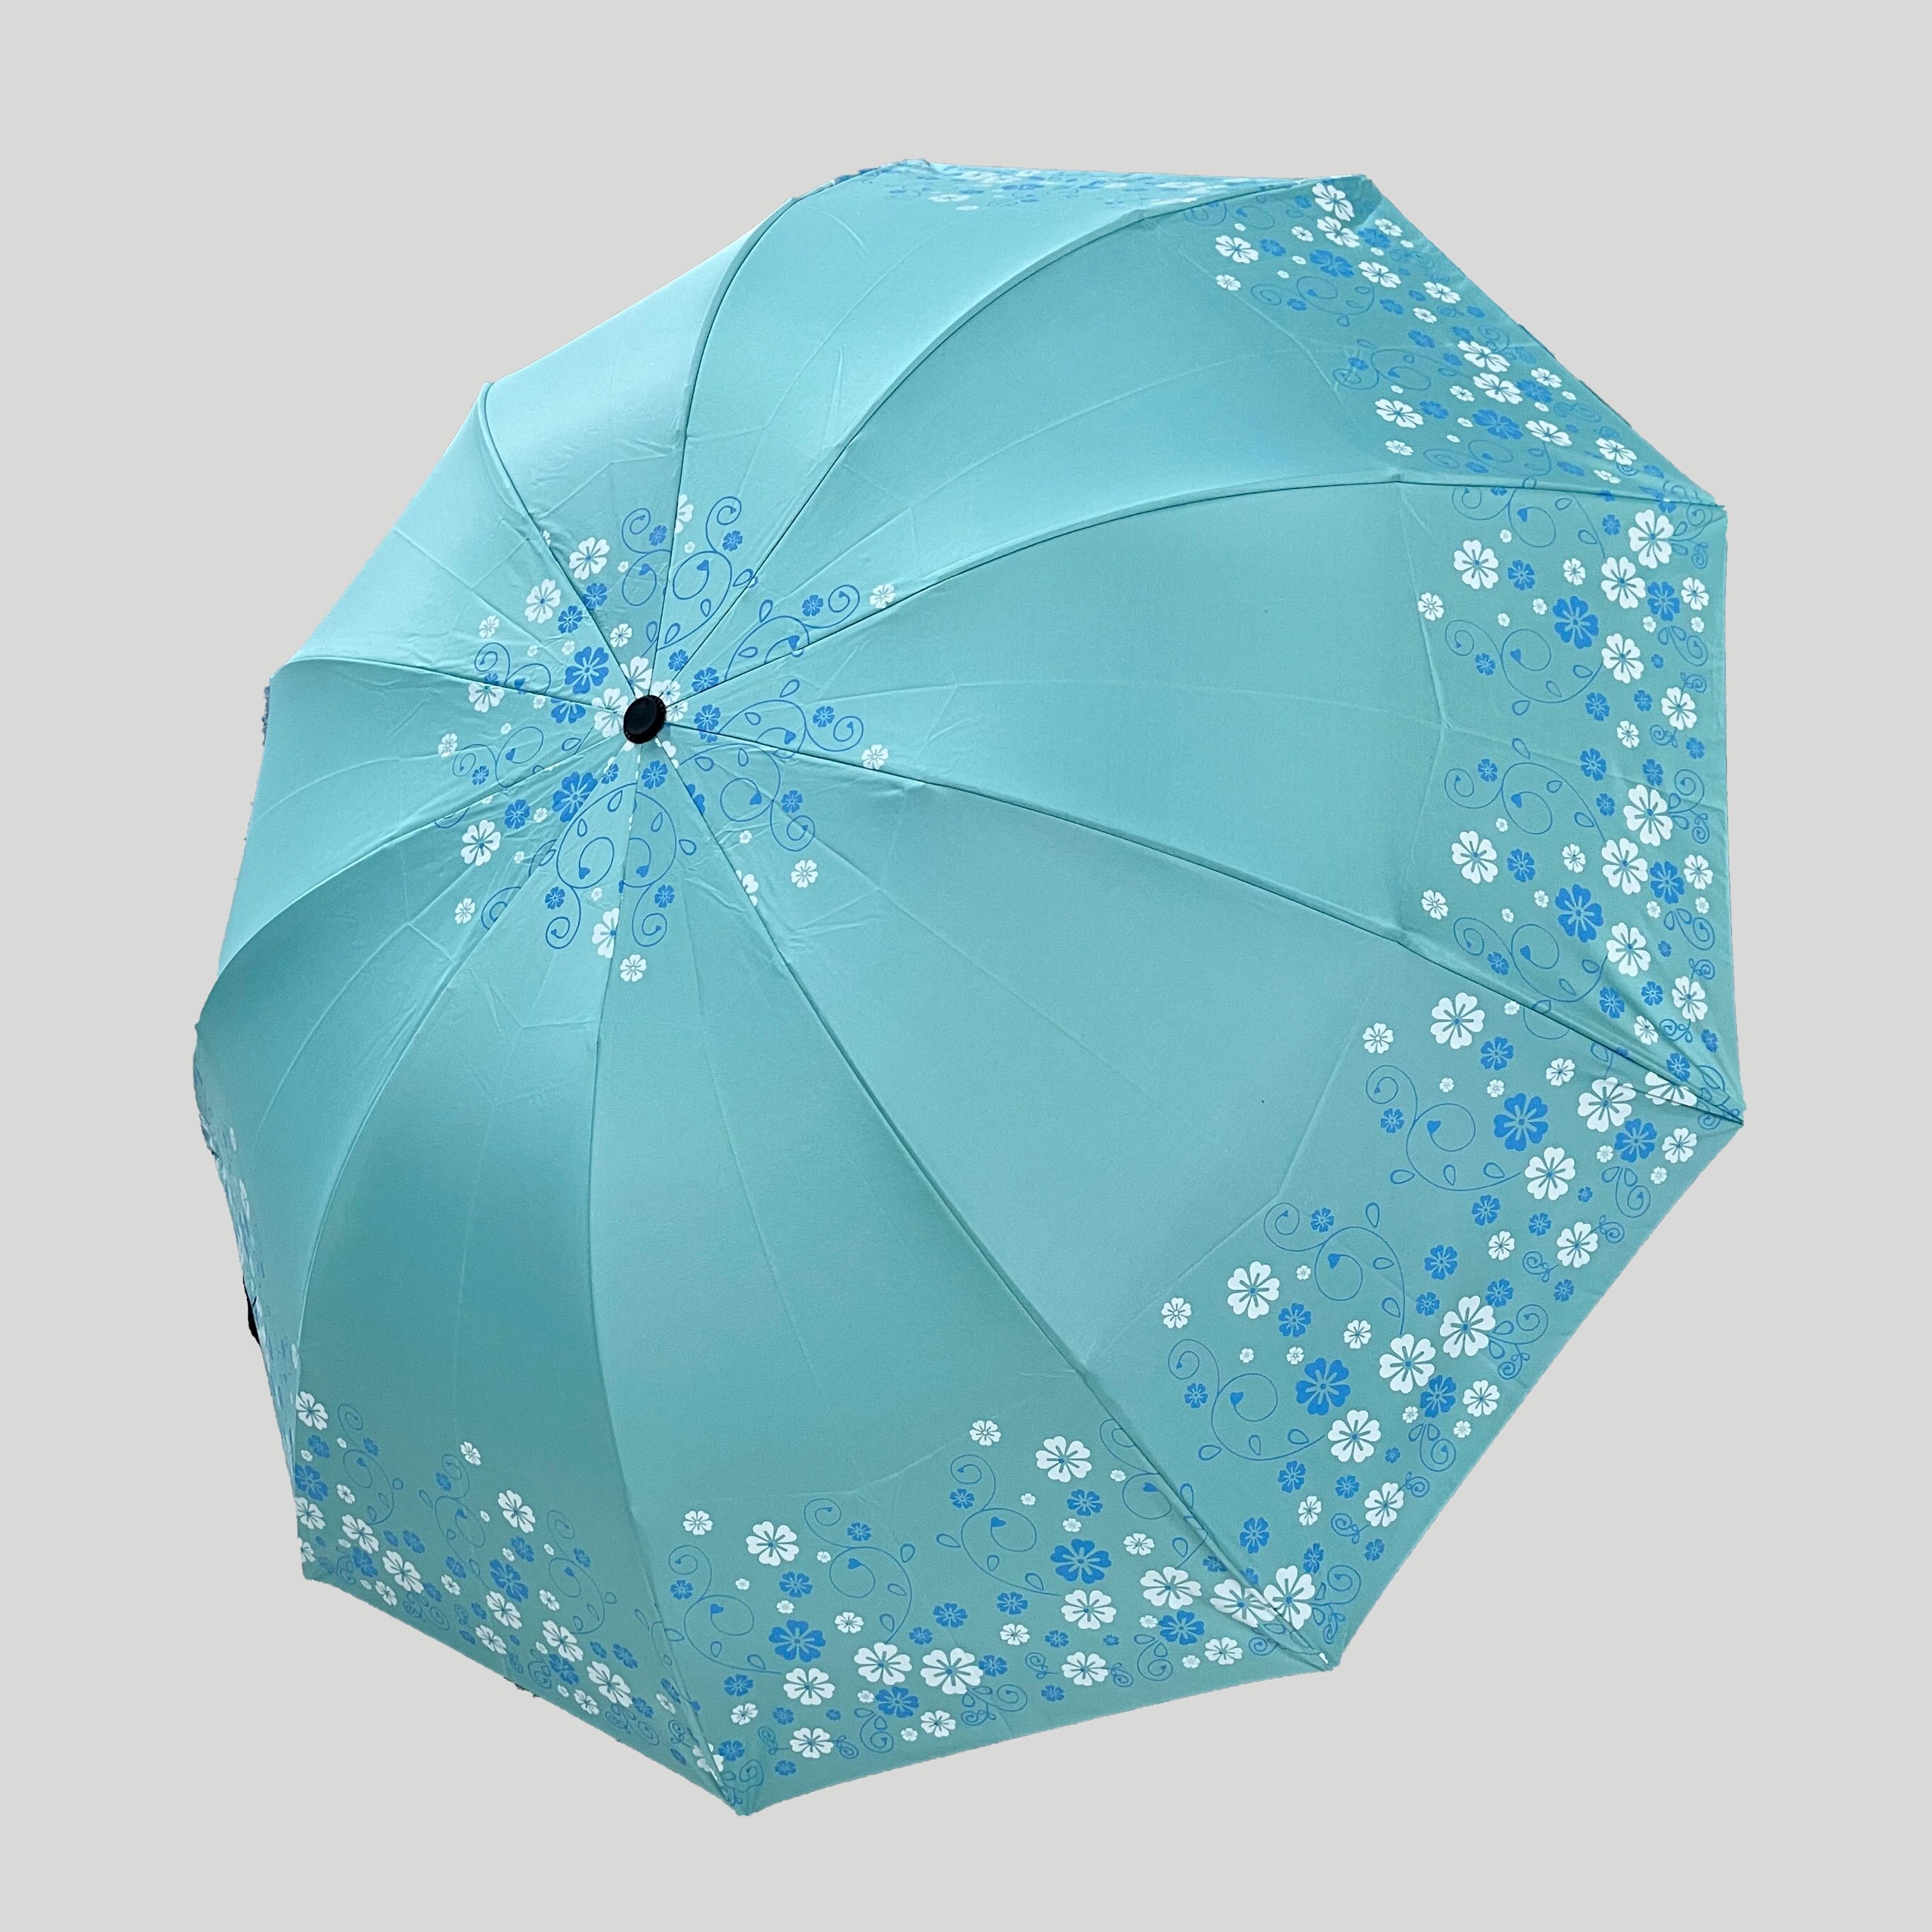 UV Umbrellaฝน ร่มกันแดด ร่มกันยูวี ร่มพับได้ เพิ่มการเสริมแรง ร่มแคปซูล ร่มแฟชั่น พกพาง่าย น้ำหนักเบา มีให้เลือกหลายแบบ